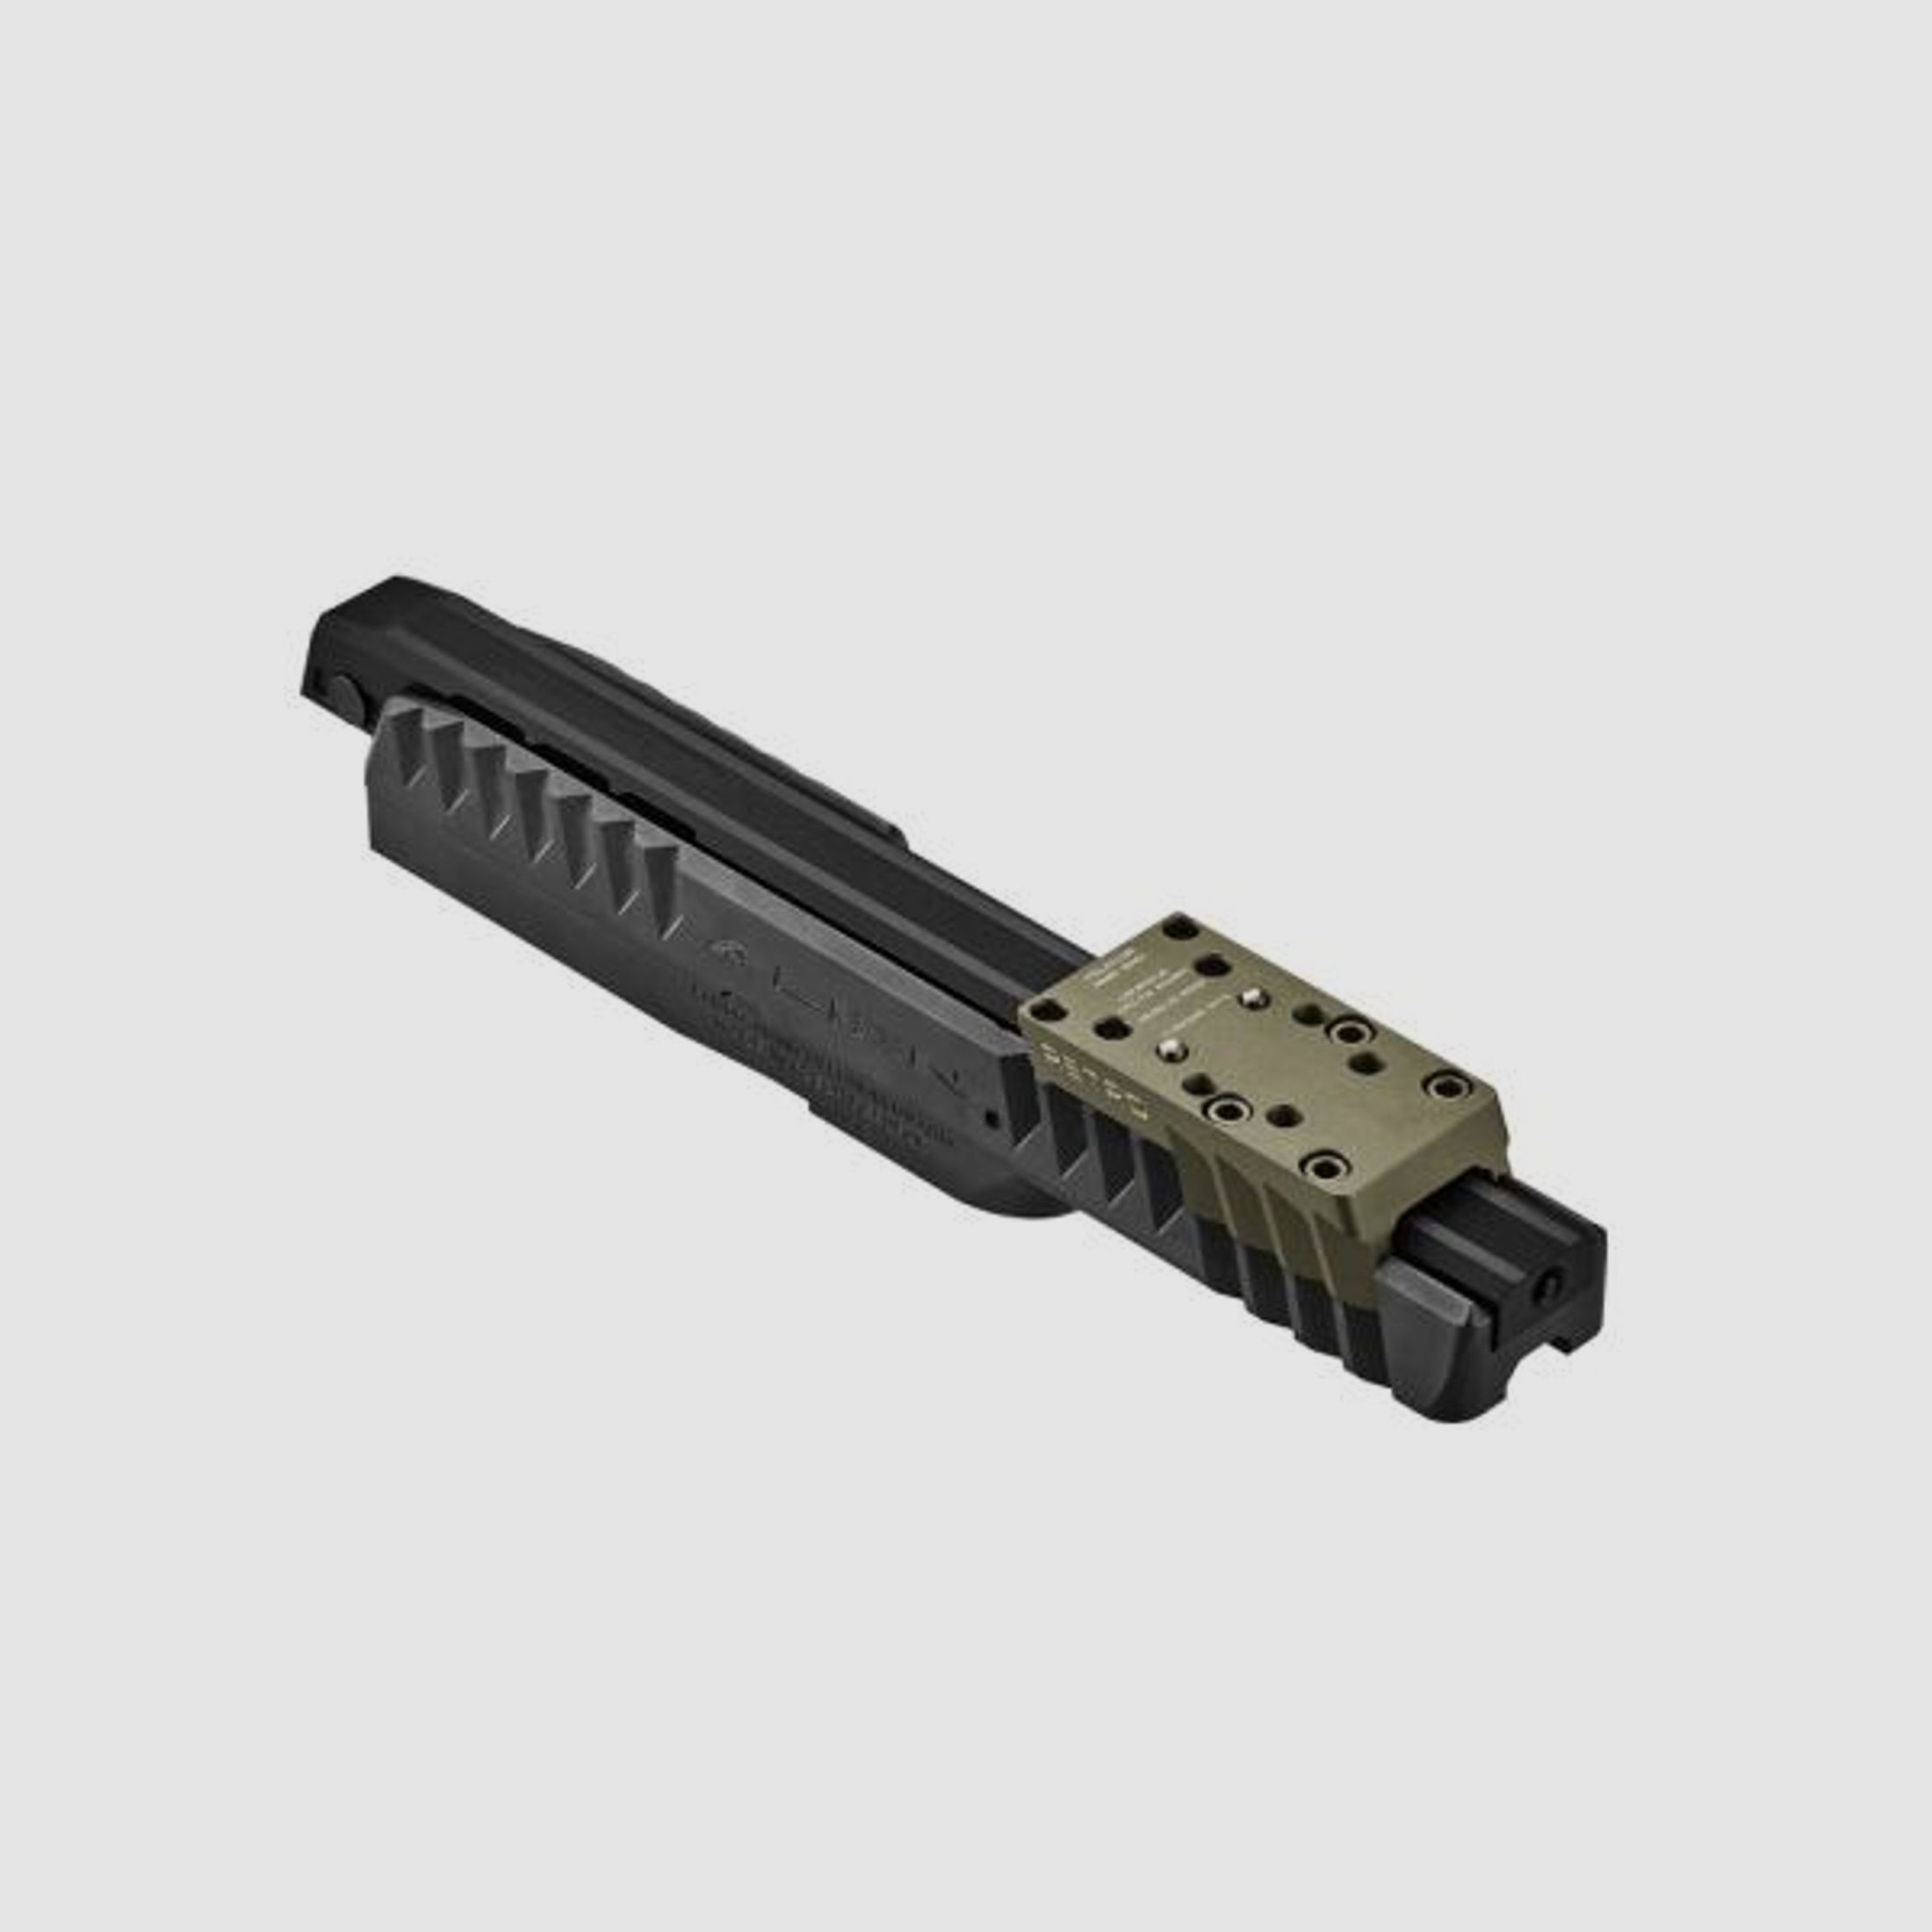 Laugo Arms Pistole Mod. ALIEN IPSC Retro 9mmLuger